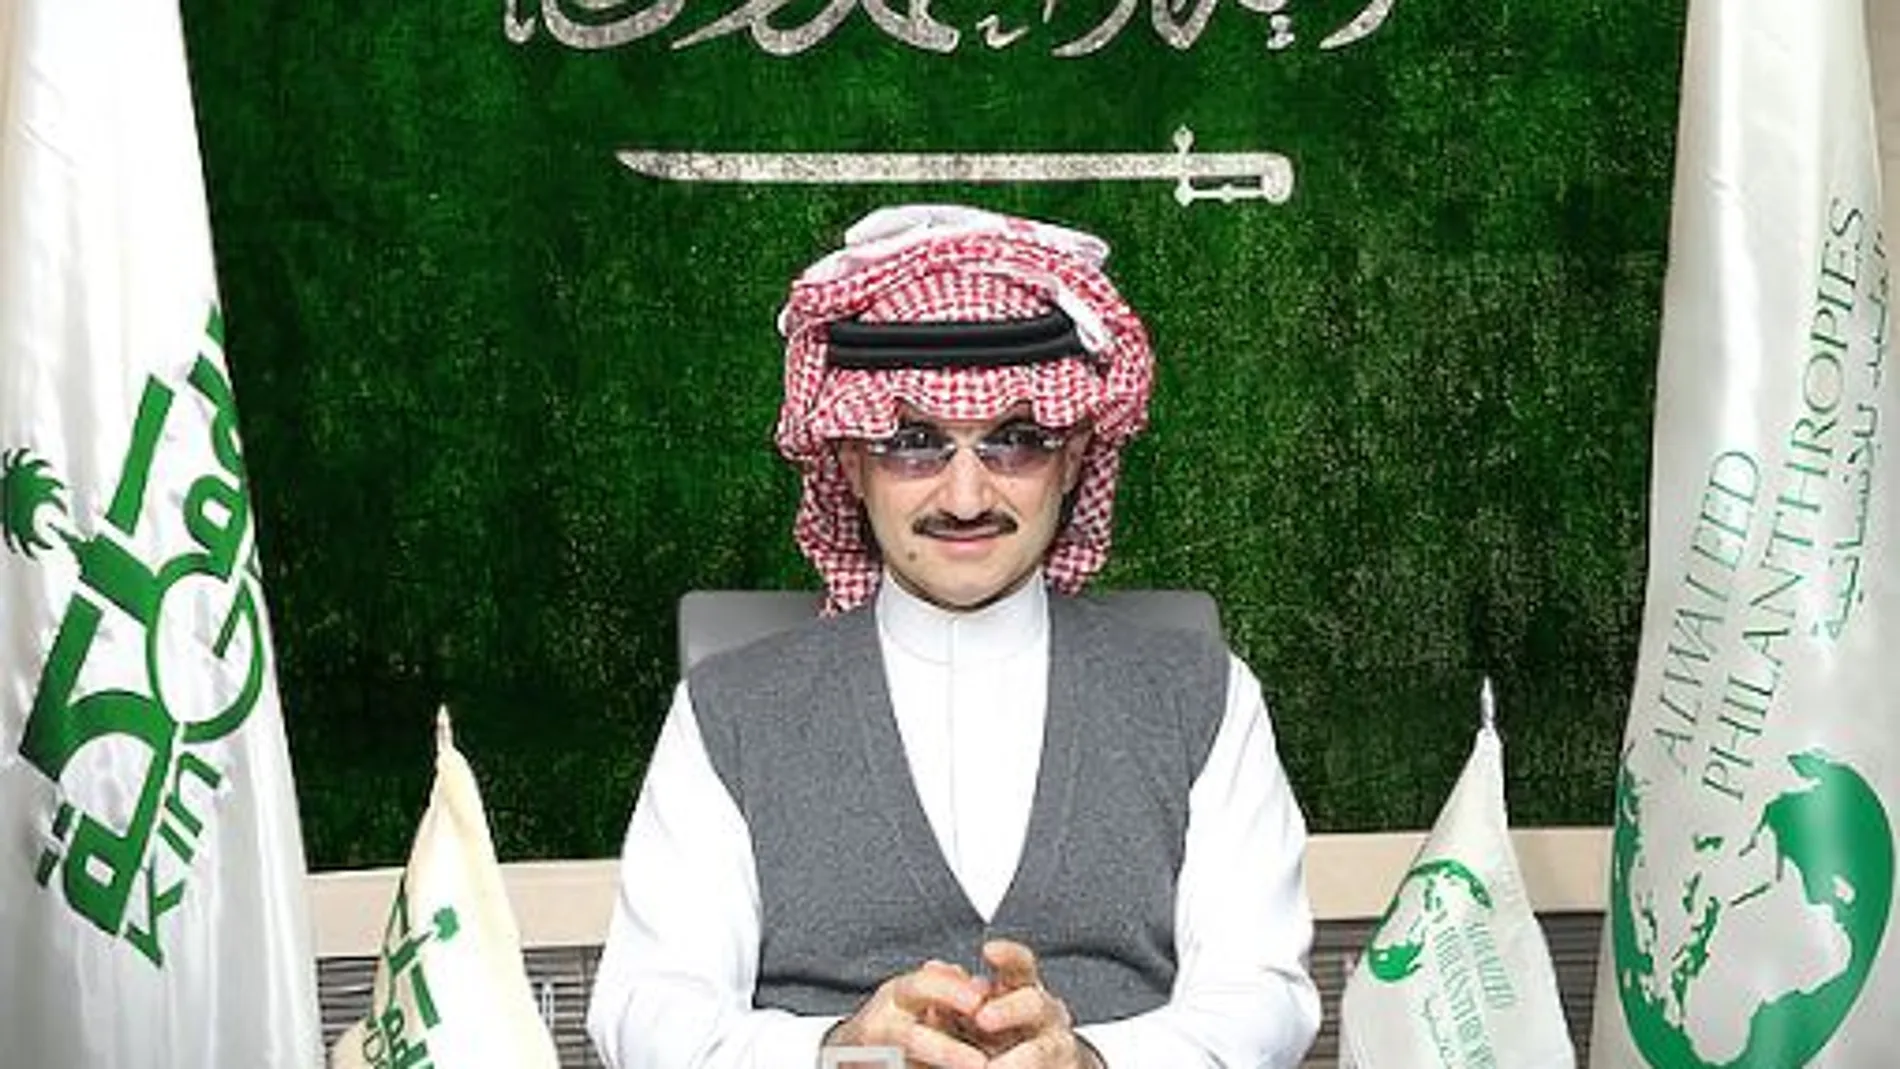 El príncipe saudí Alwaleed bin Talal